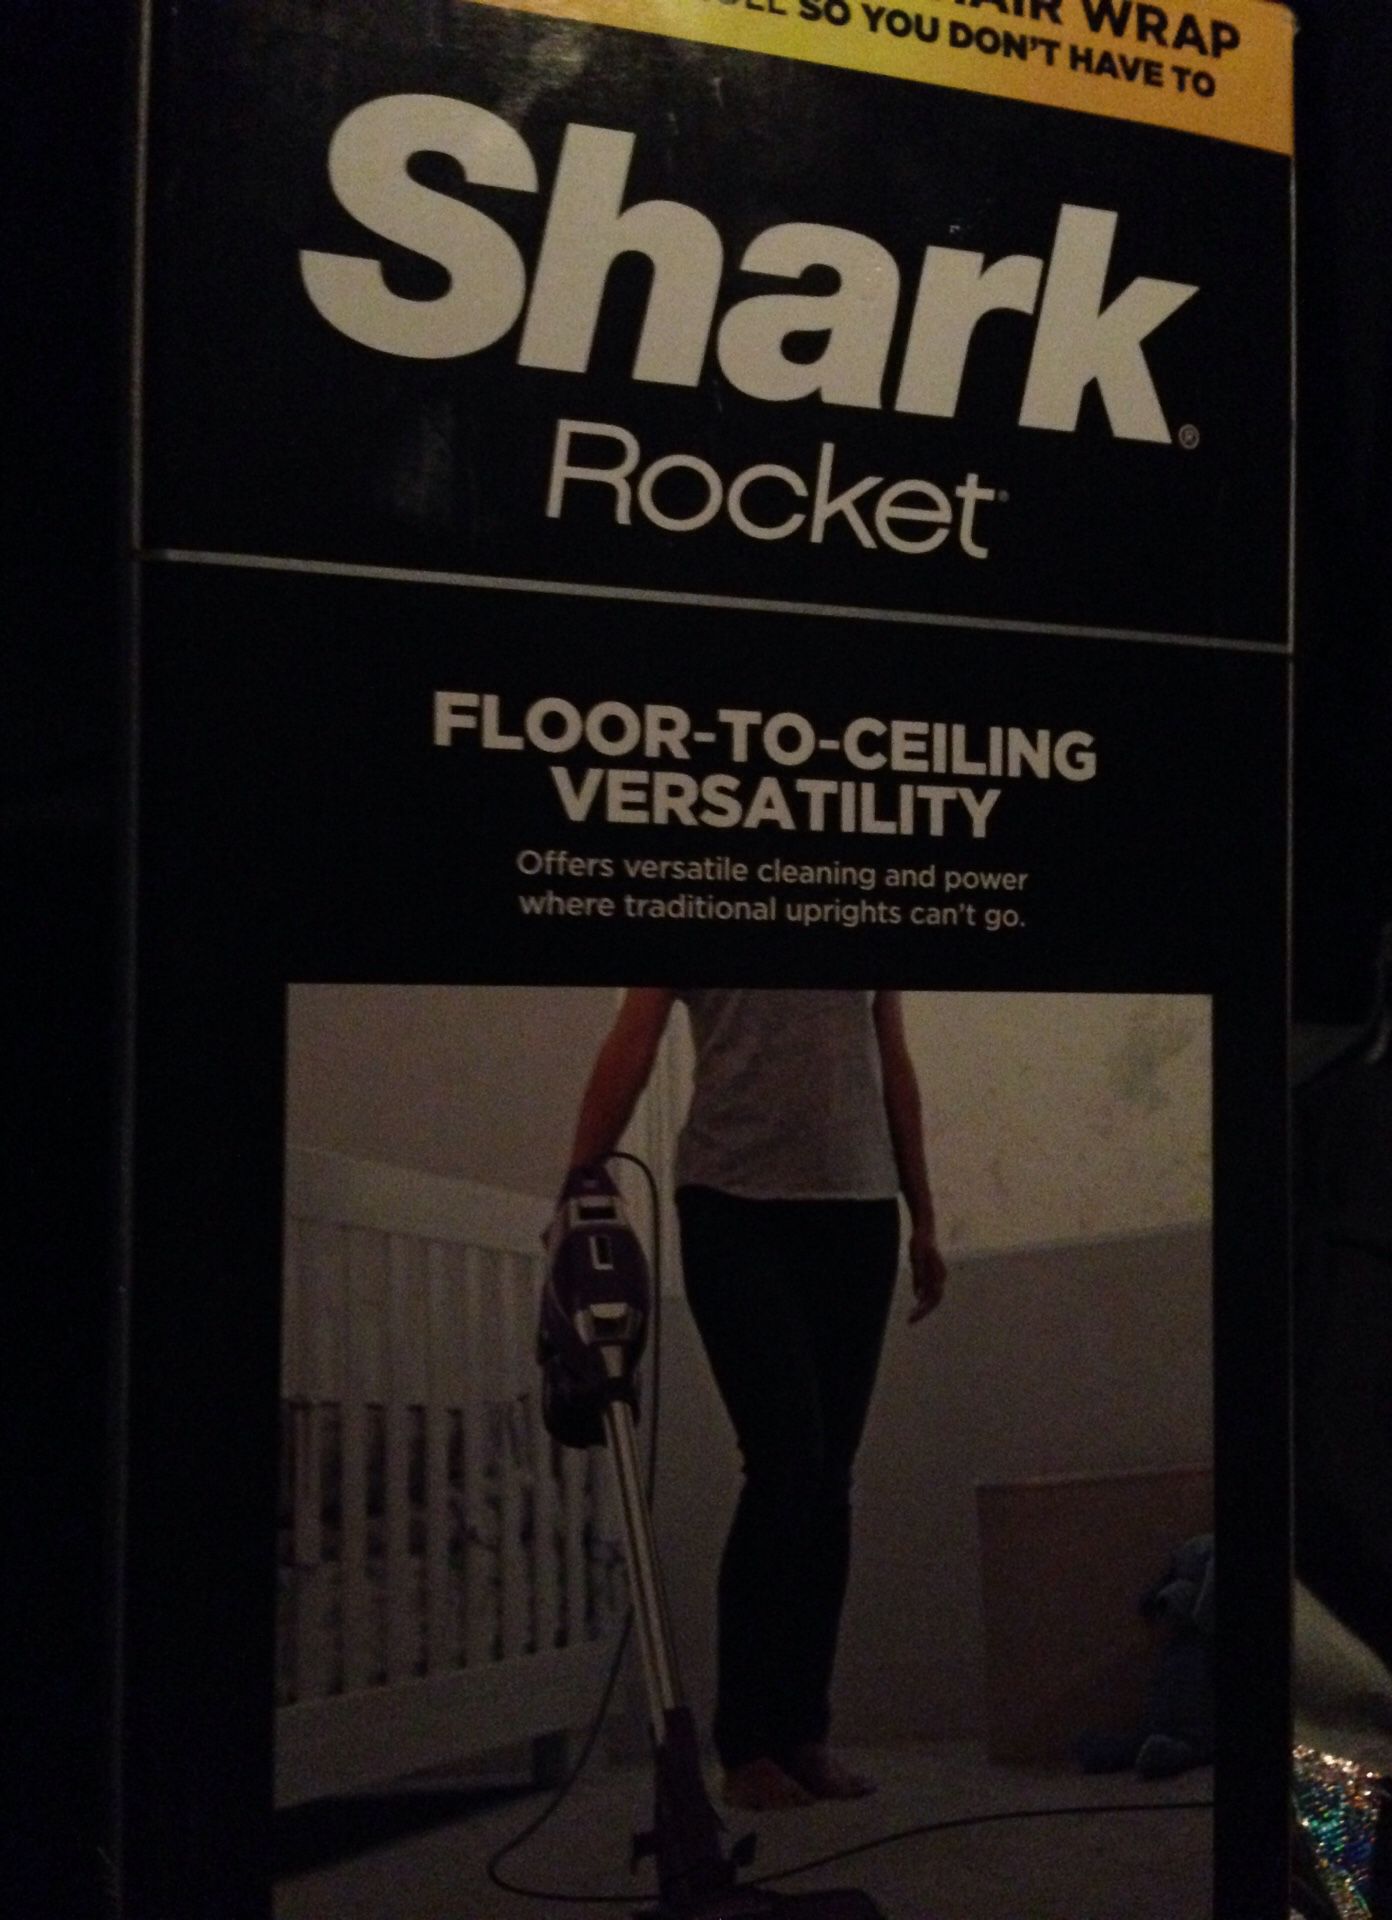 Shark corded vacuum cleaner ( rocket).